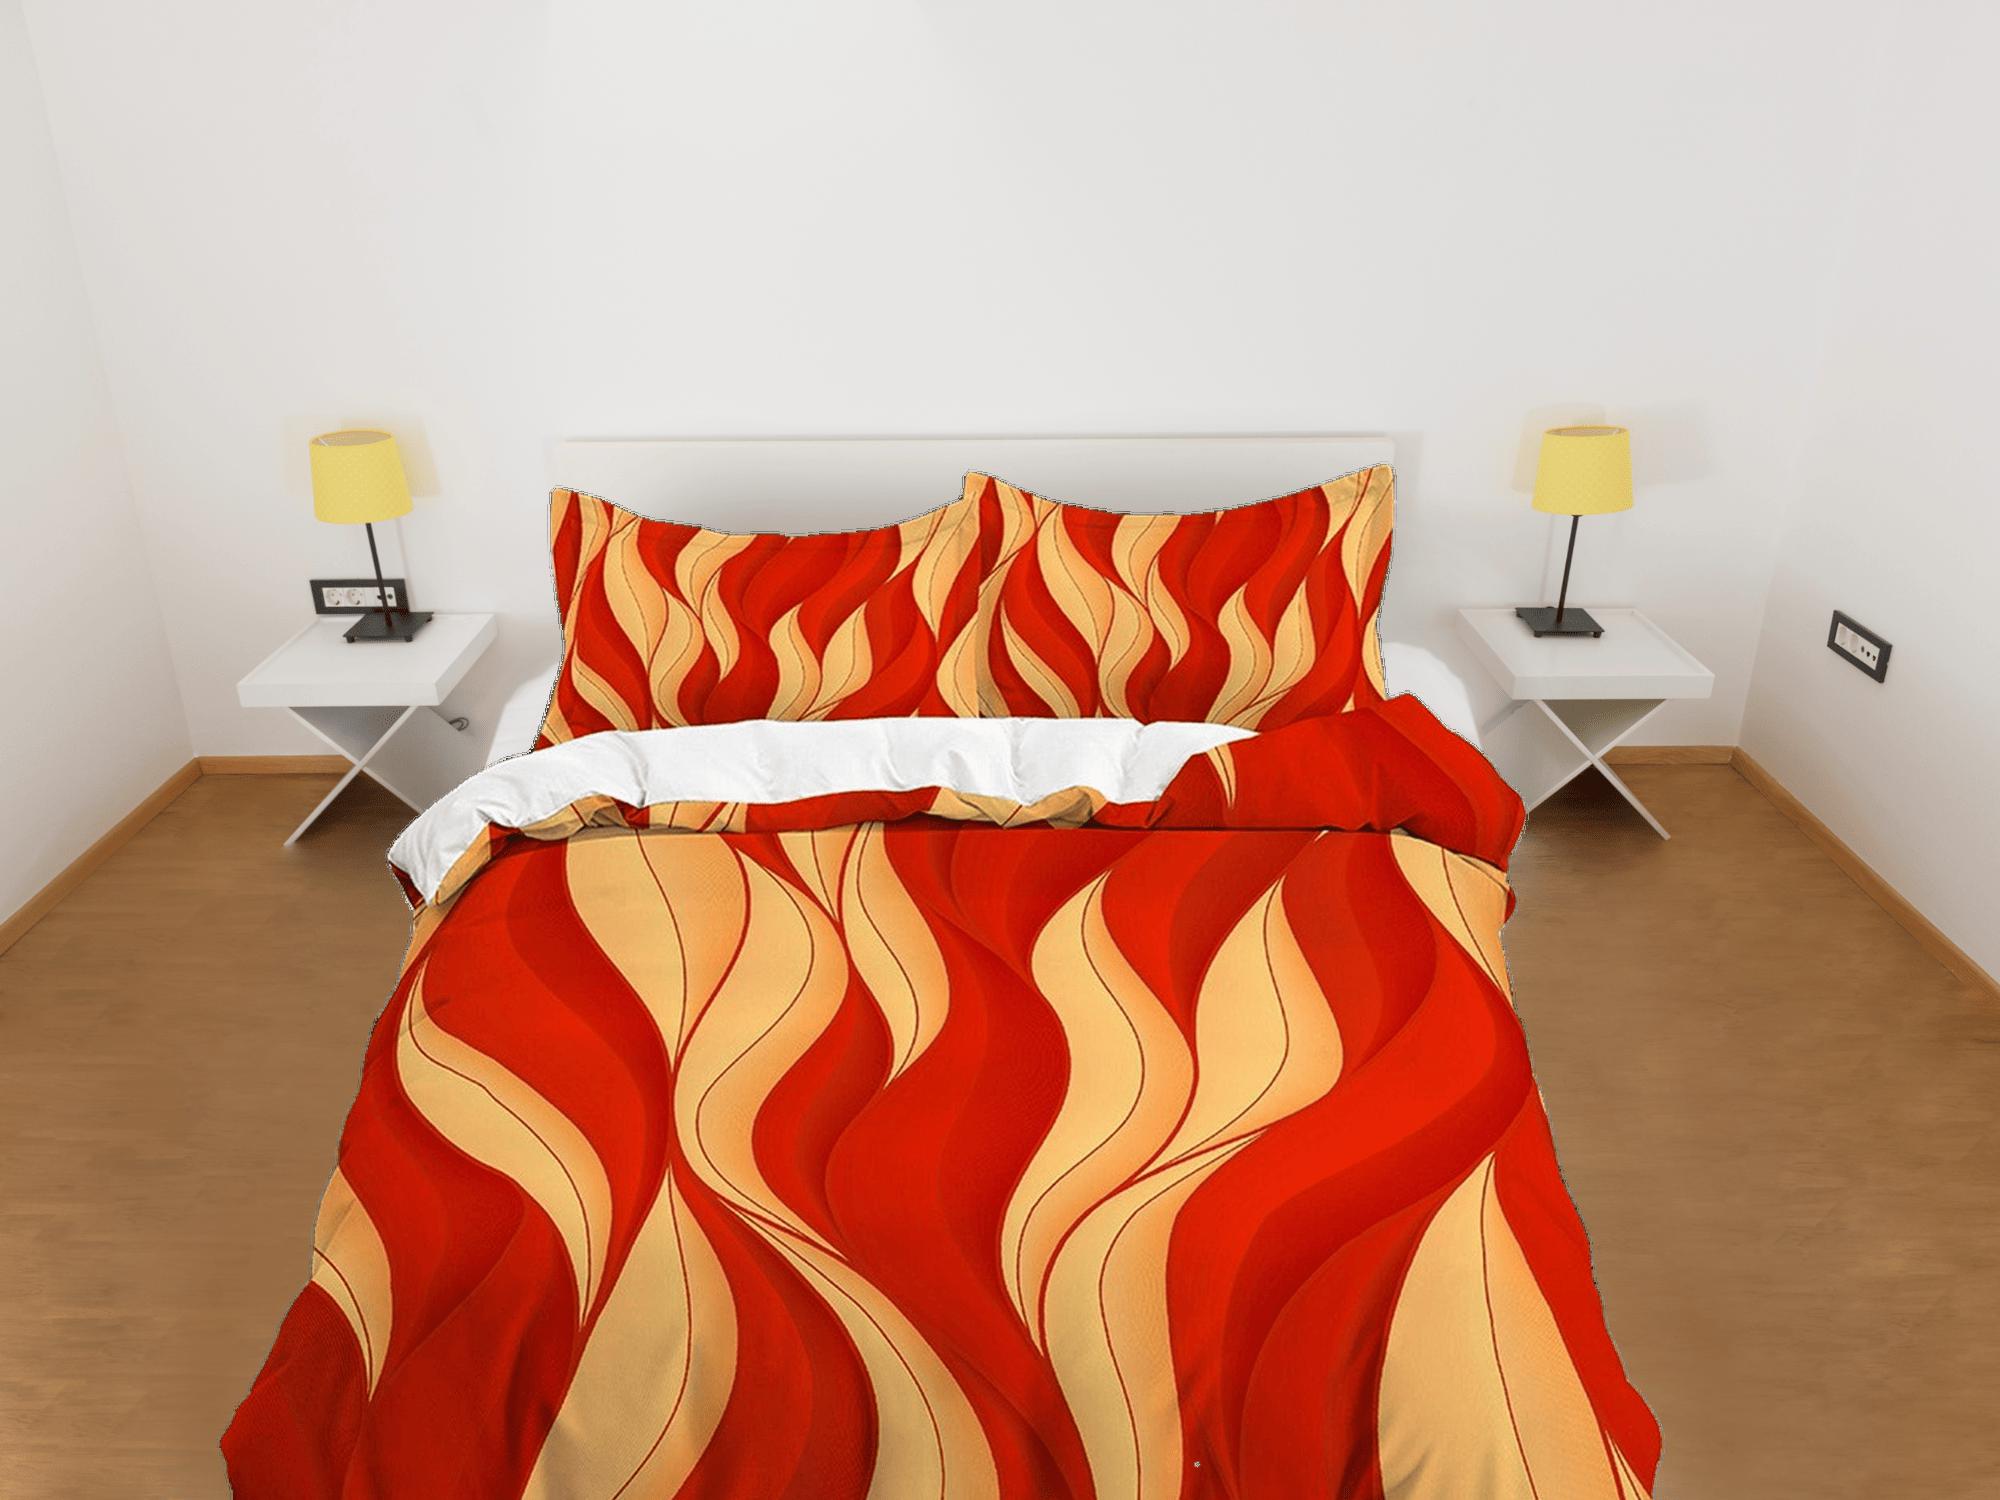 daintyduvet Mid century modern bedroom art set yellow orange red duvet cover, aesthetic room decor boho chic bedding set full, colorful maximalist retro